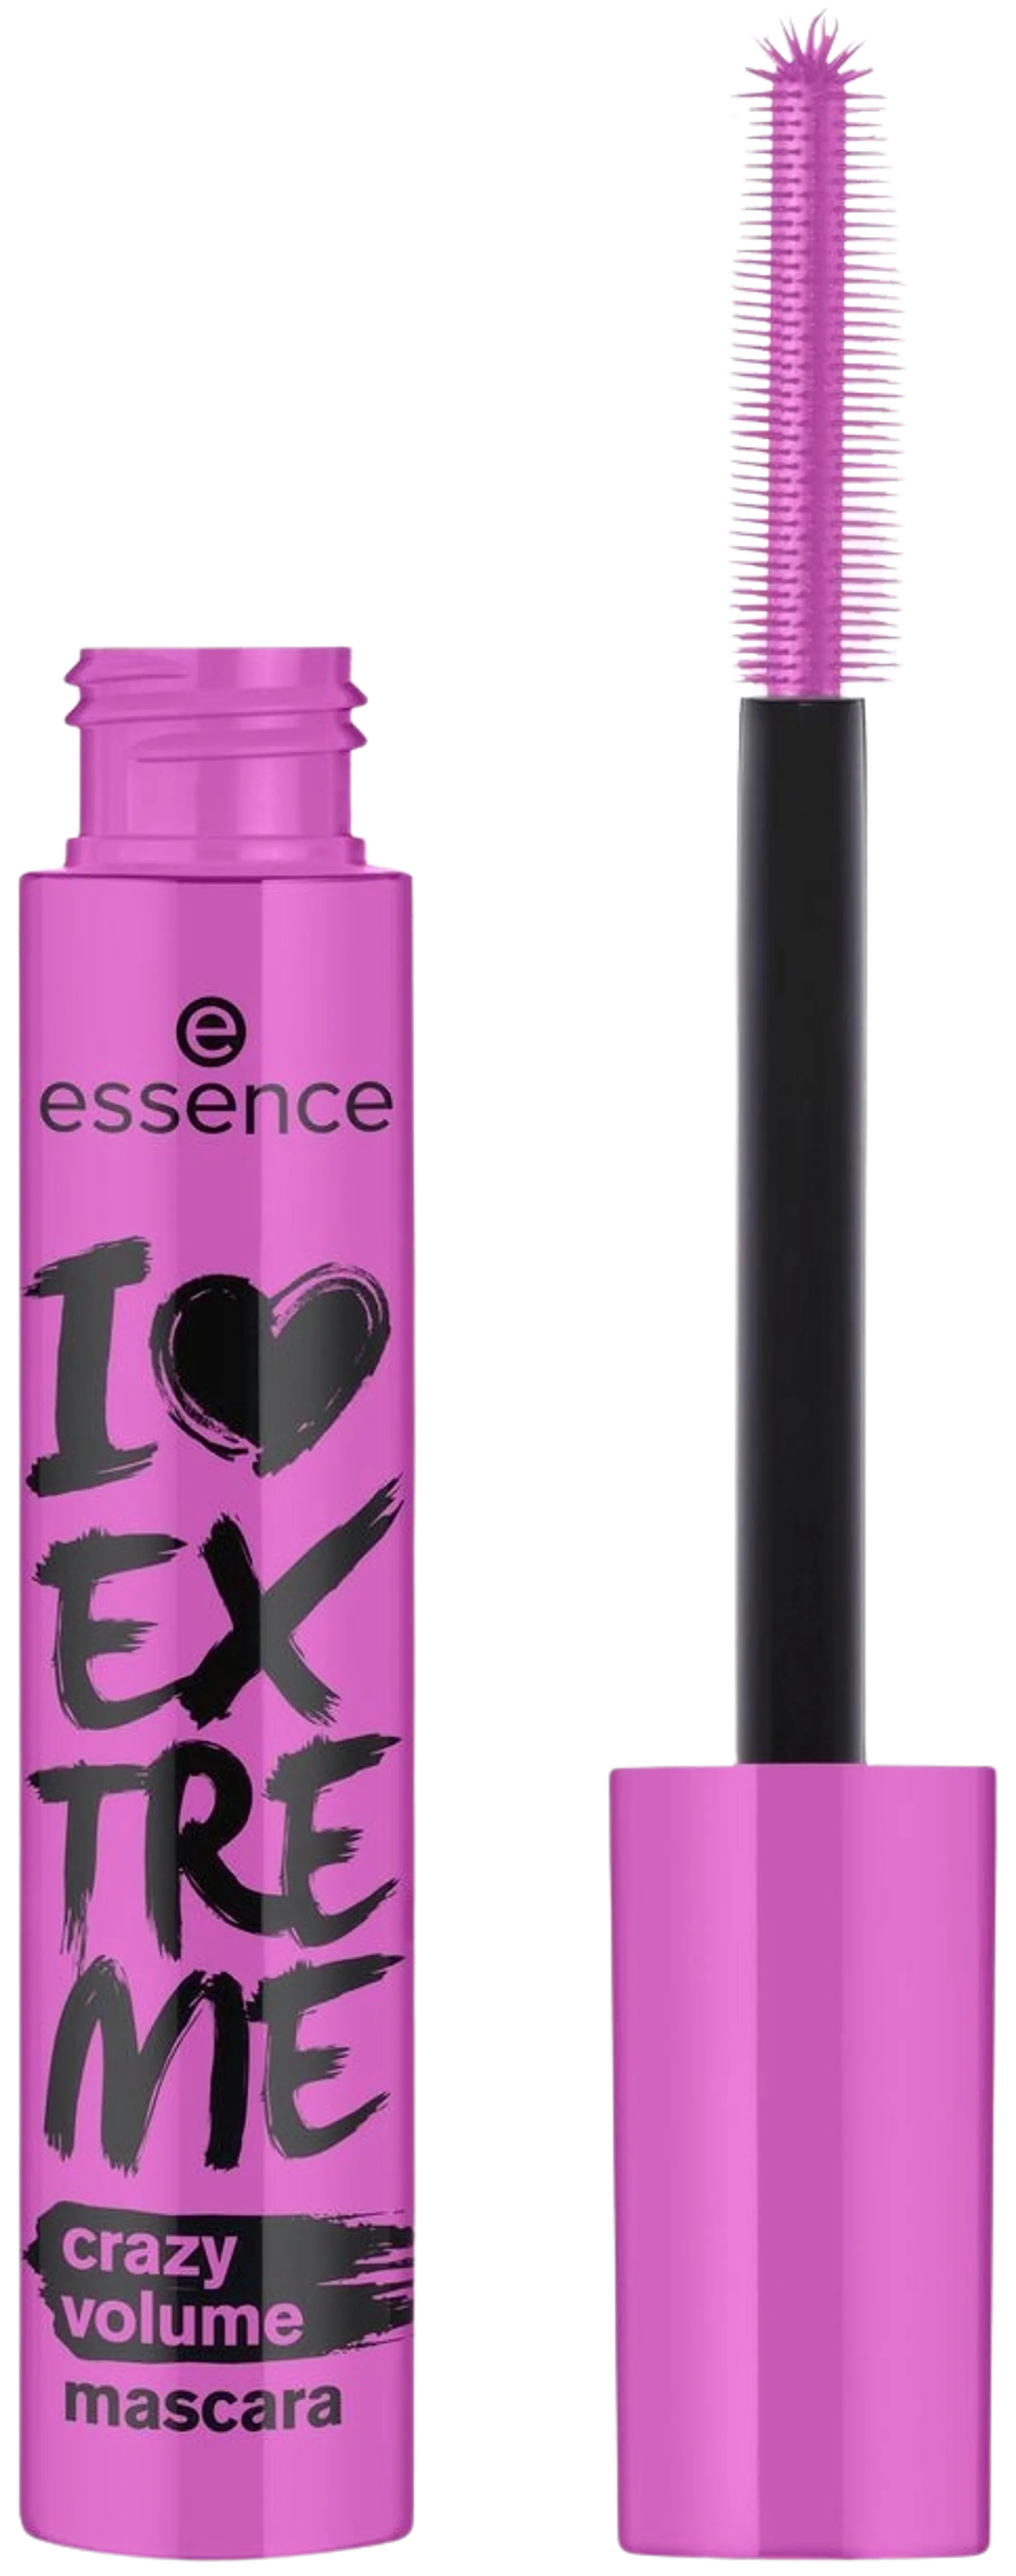 essence I LOVE EXTREME crazy volume mascara 12 ml - 1